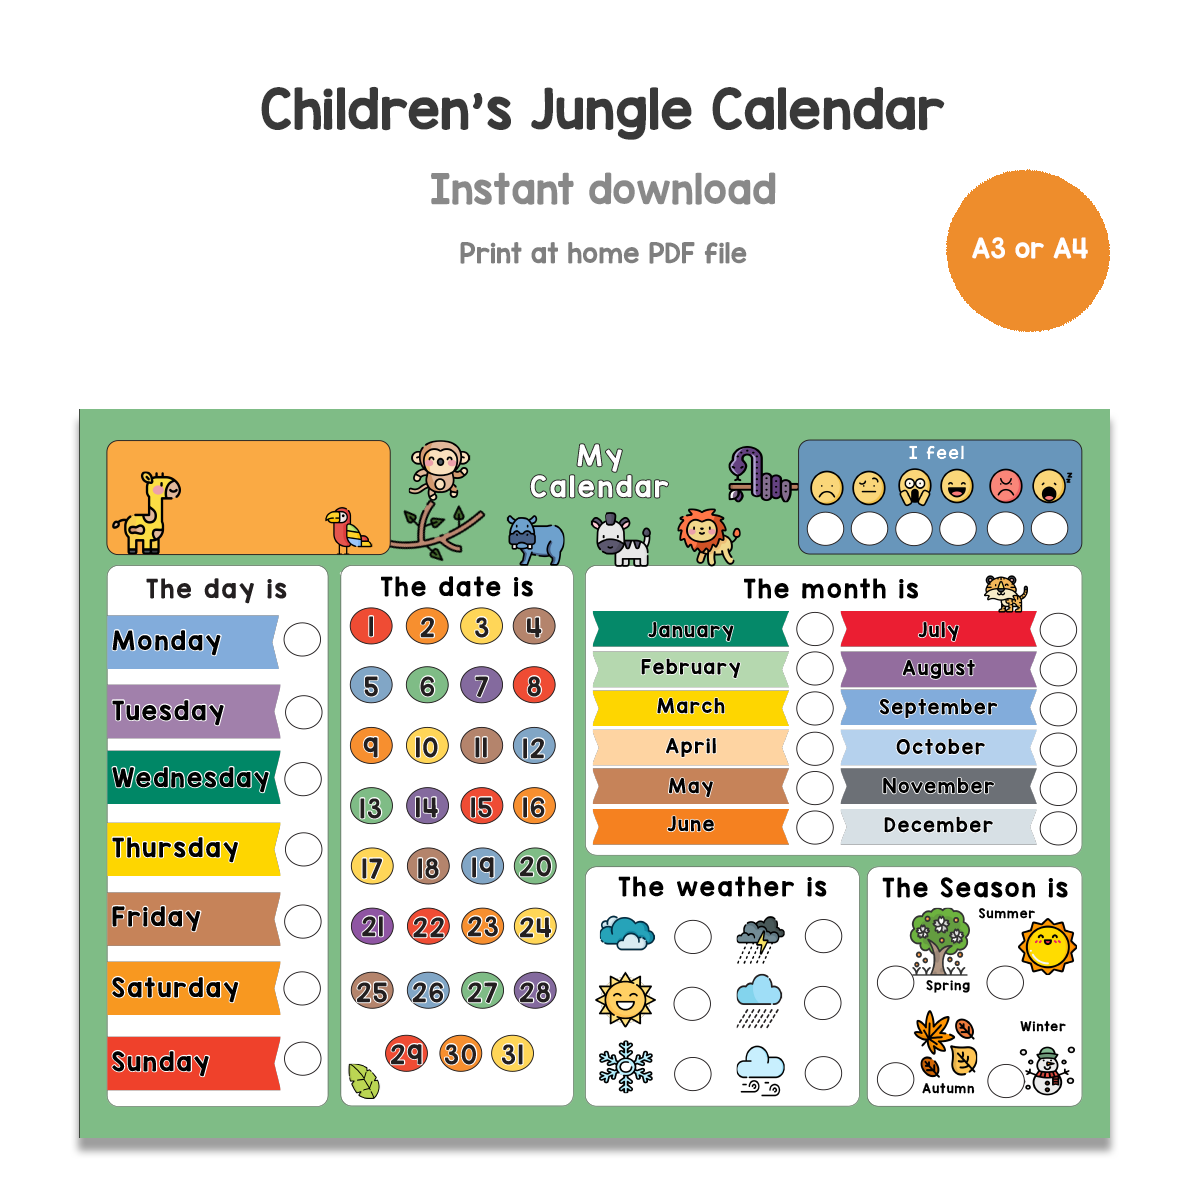 Children's Jungle Calendar